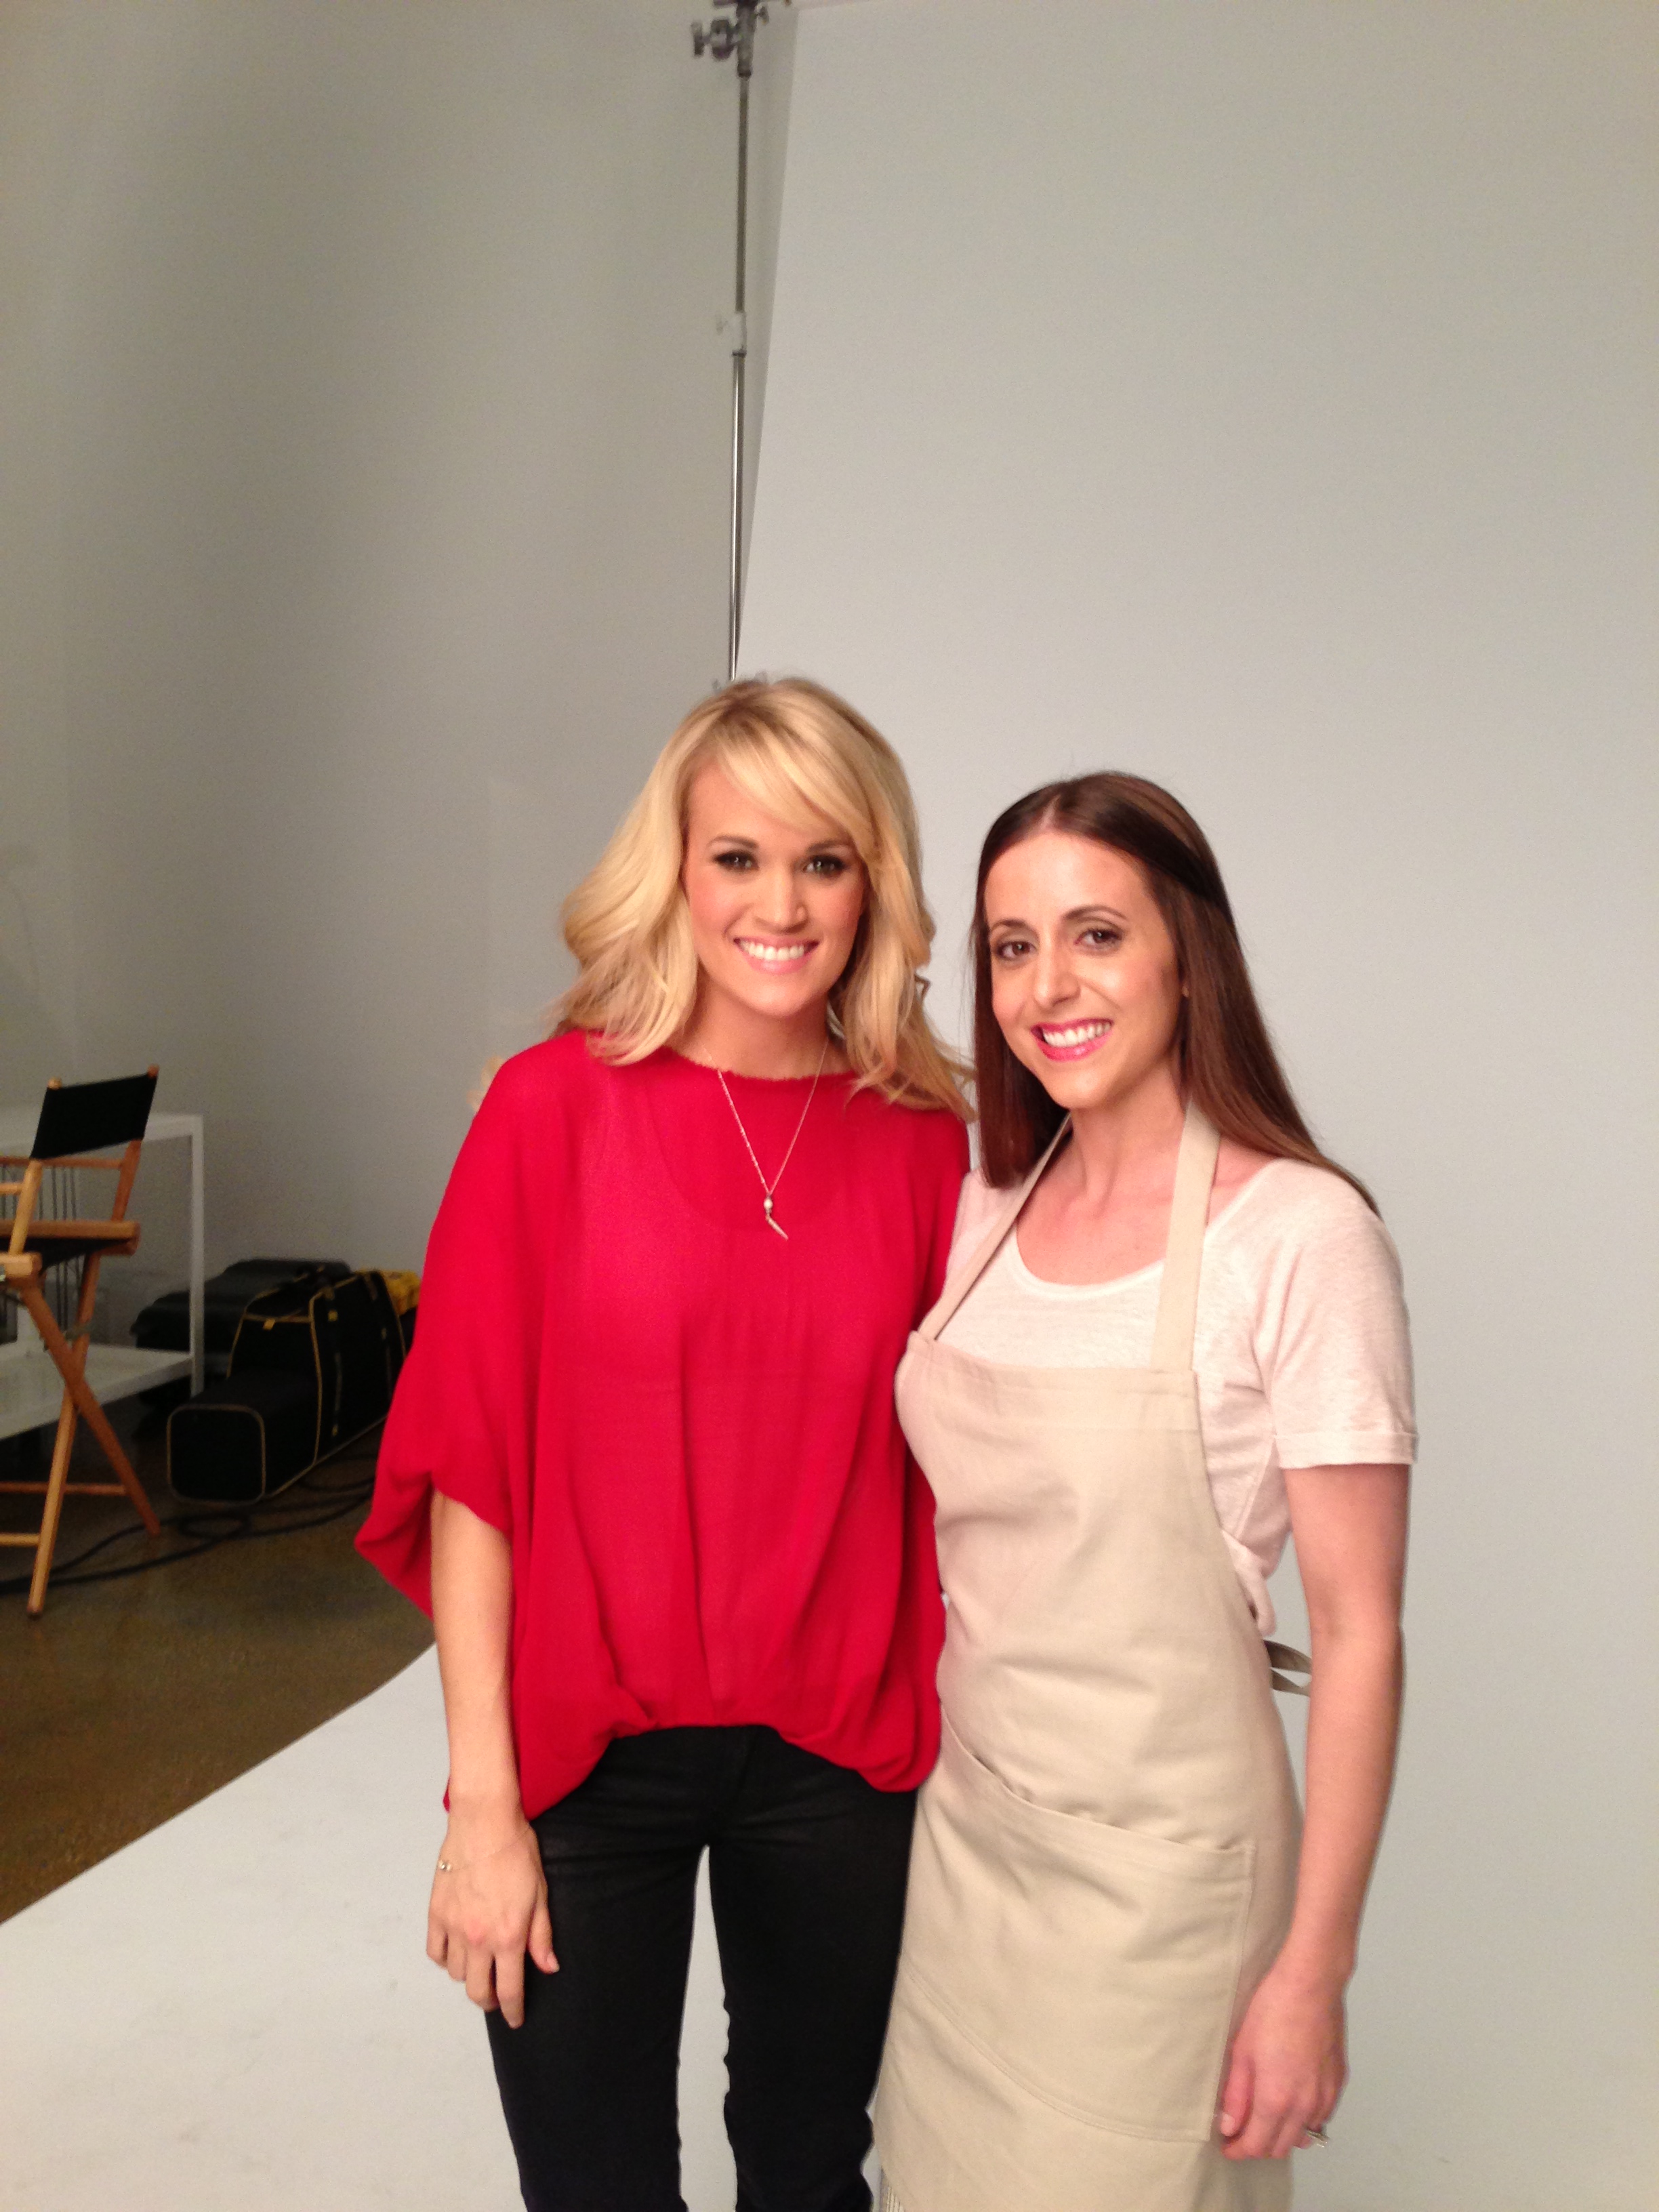 LeeAnn with Carrie Underwood on set